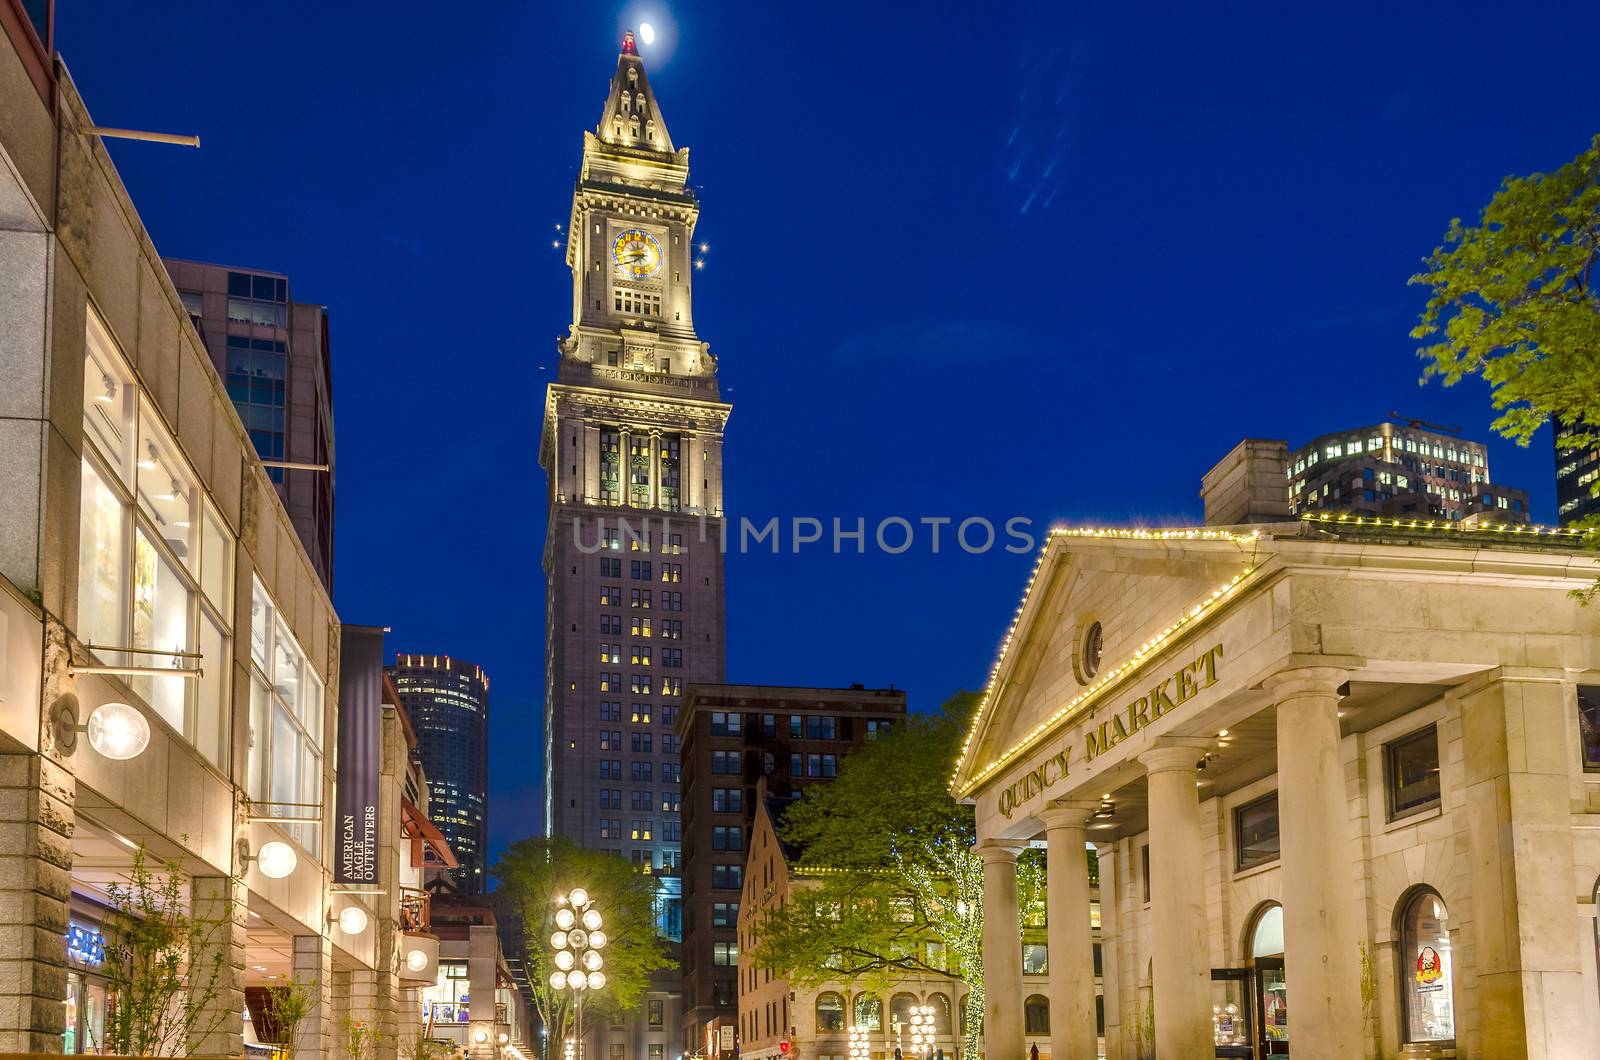 Custom House Tower and Quincy Market at night, Boston, USA by marcorubino